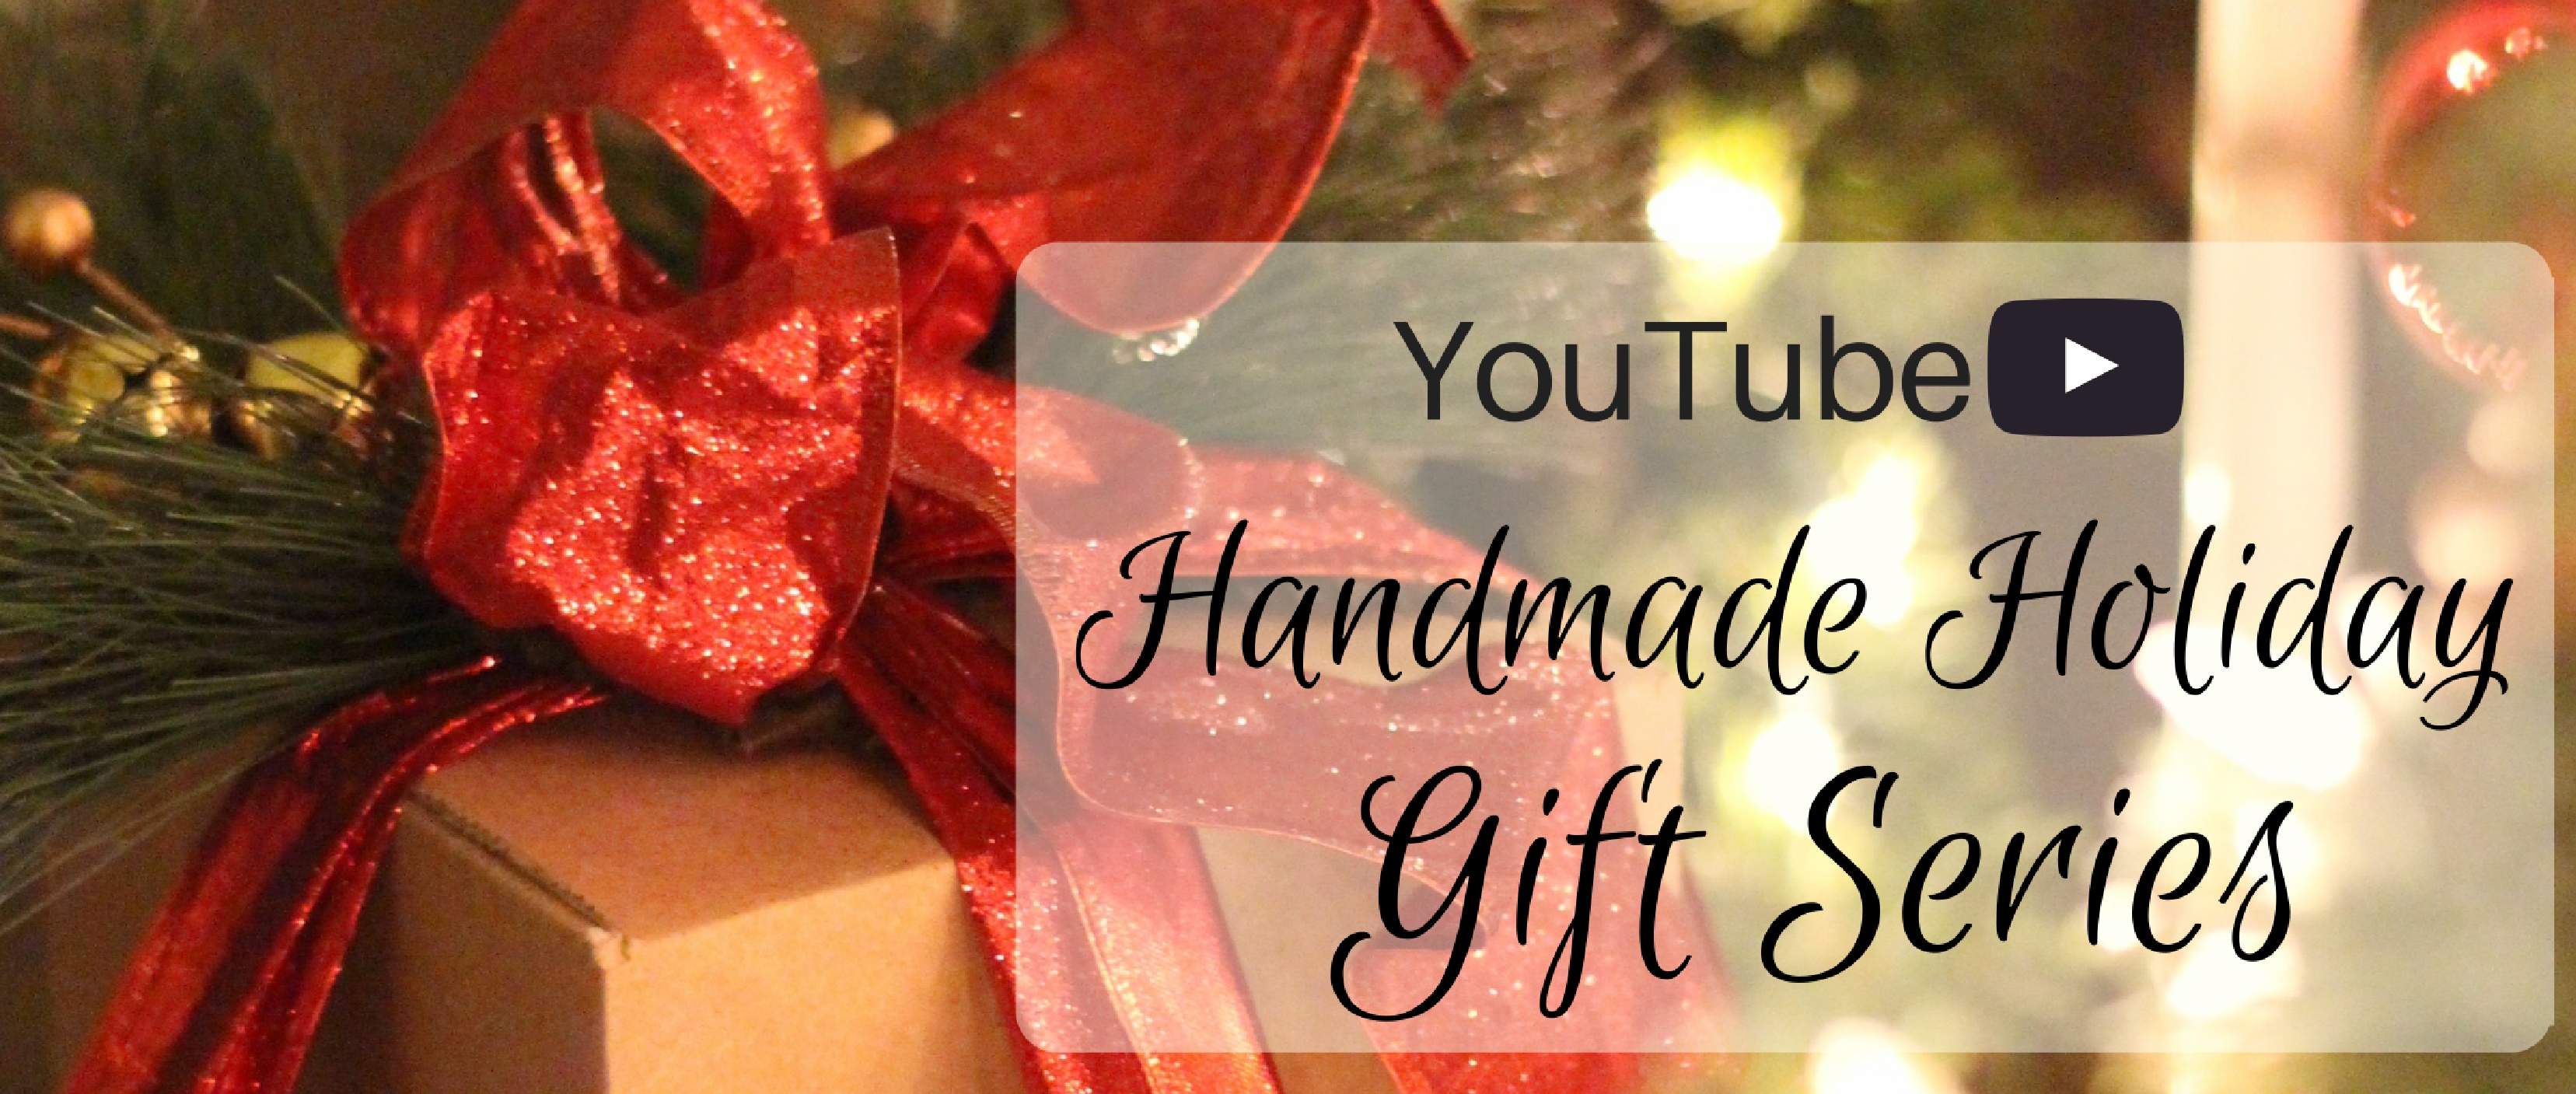 Youtube Handmade Holiday Gift Series